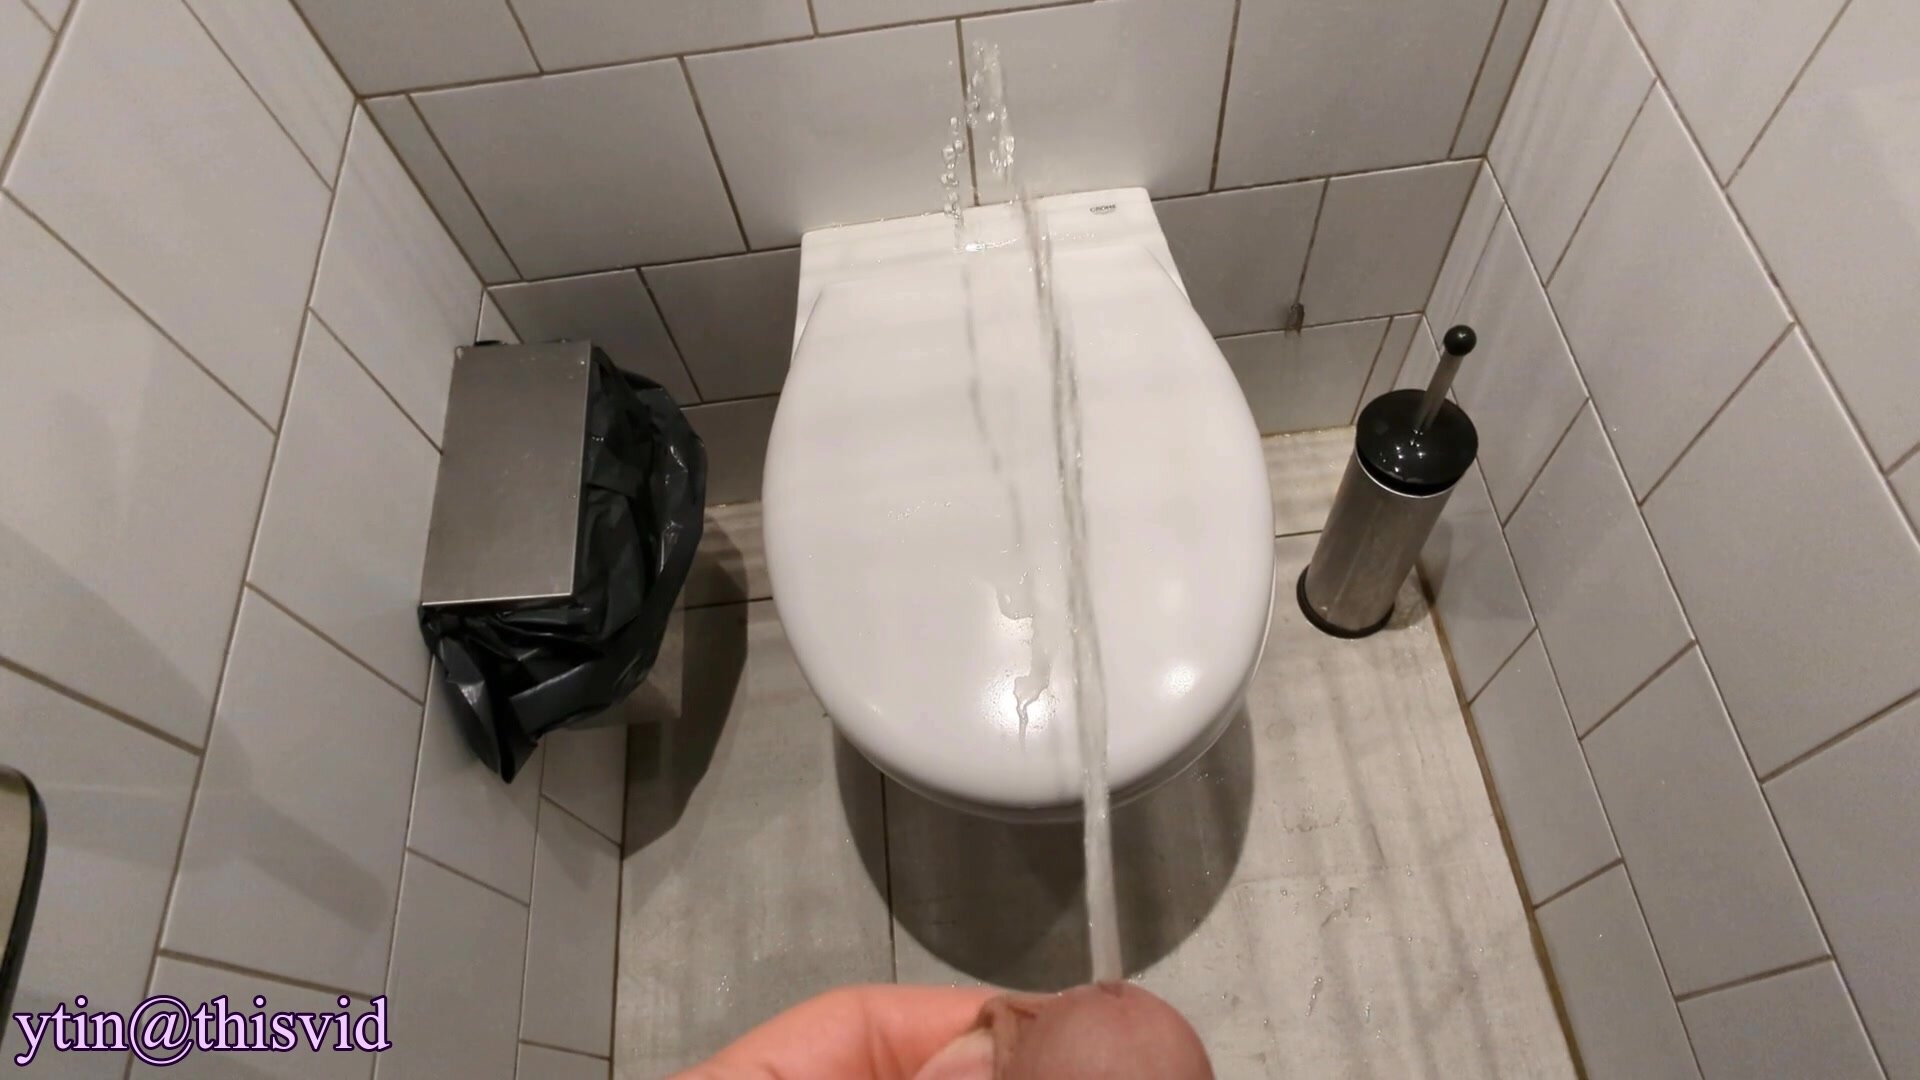 Public Restroom Piss on Toilet Seat and Floor